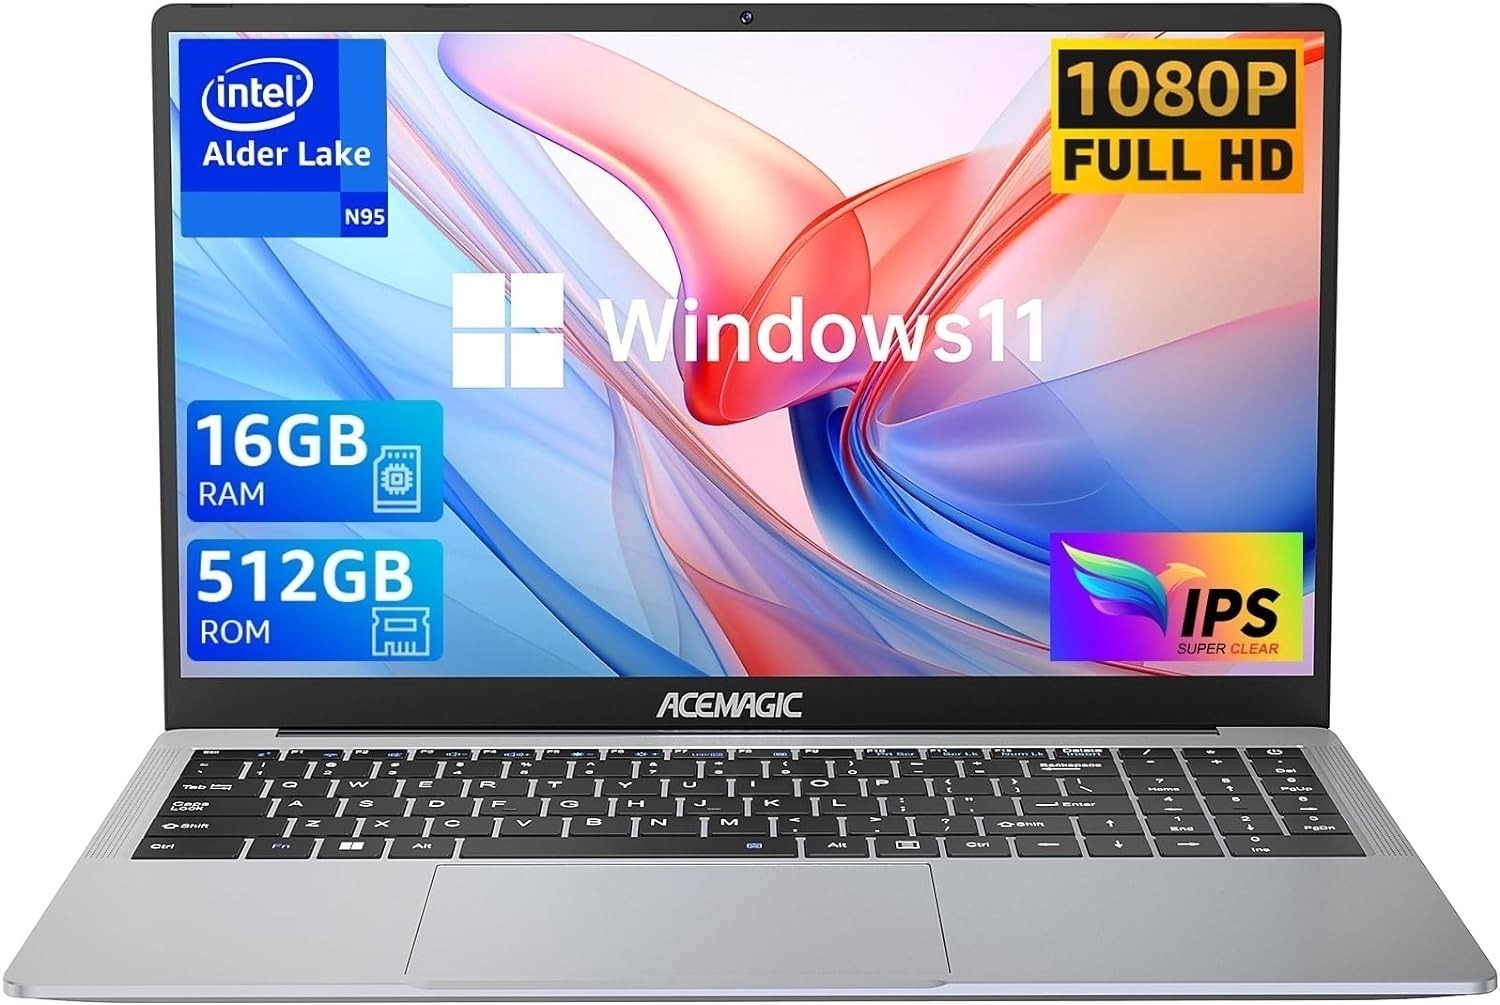 ACEMAGIC ‎AX15 Laptop: 15.6" FHD Display, Intel Quad-Core 12th Alder Lake N95, 16GB DDR4, 512GB SSD $225 + Free Shipping